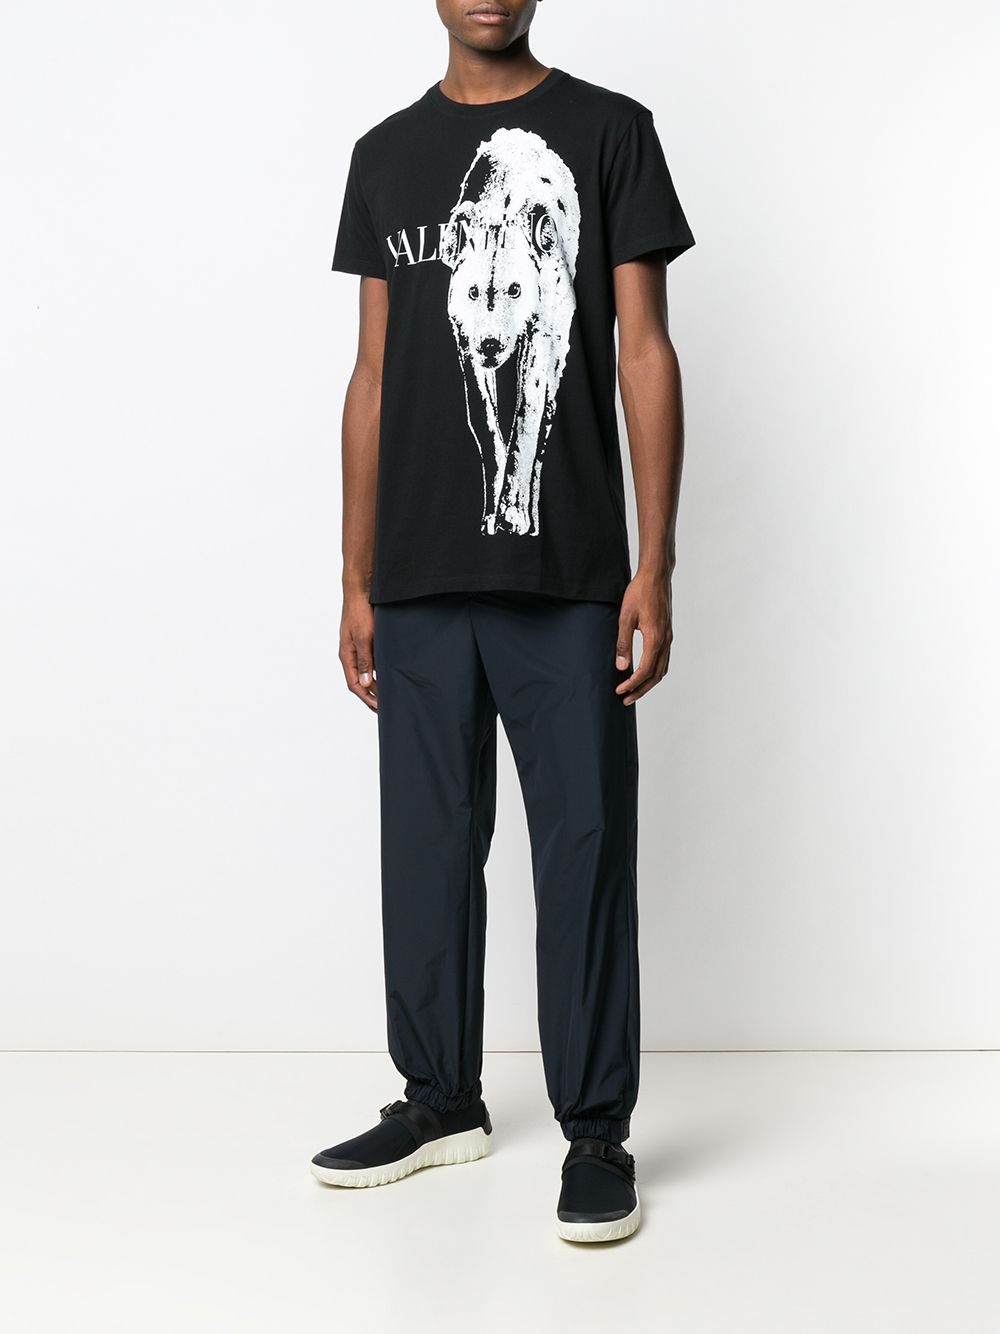 Valentino wild dog print T-shirt $315 - Buy Online - Mobile Friendly ...